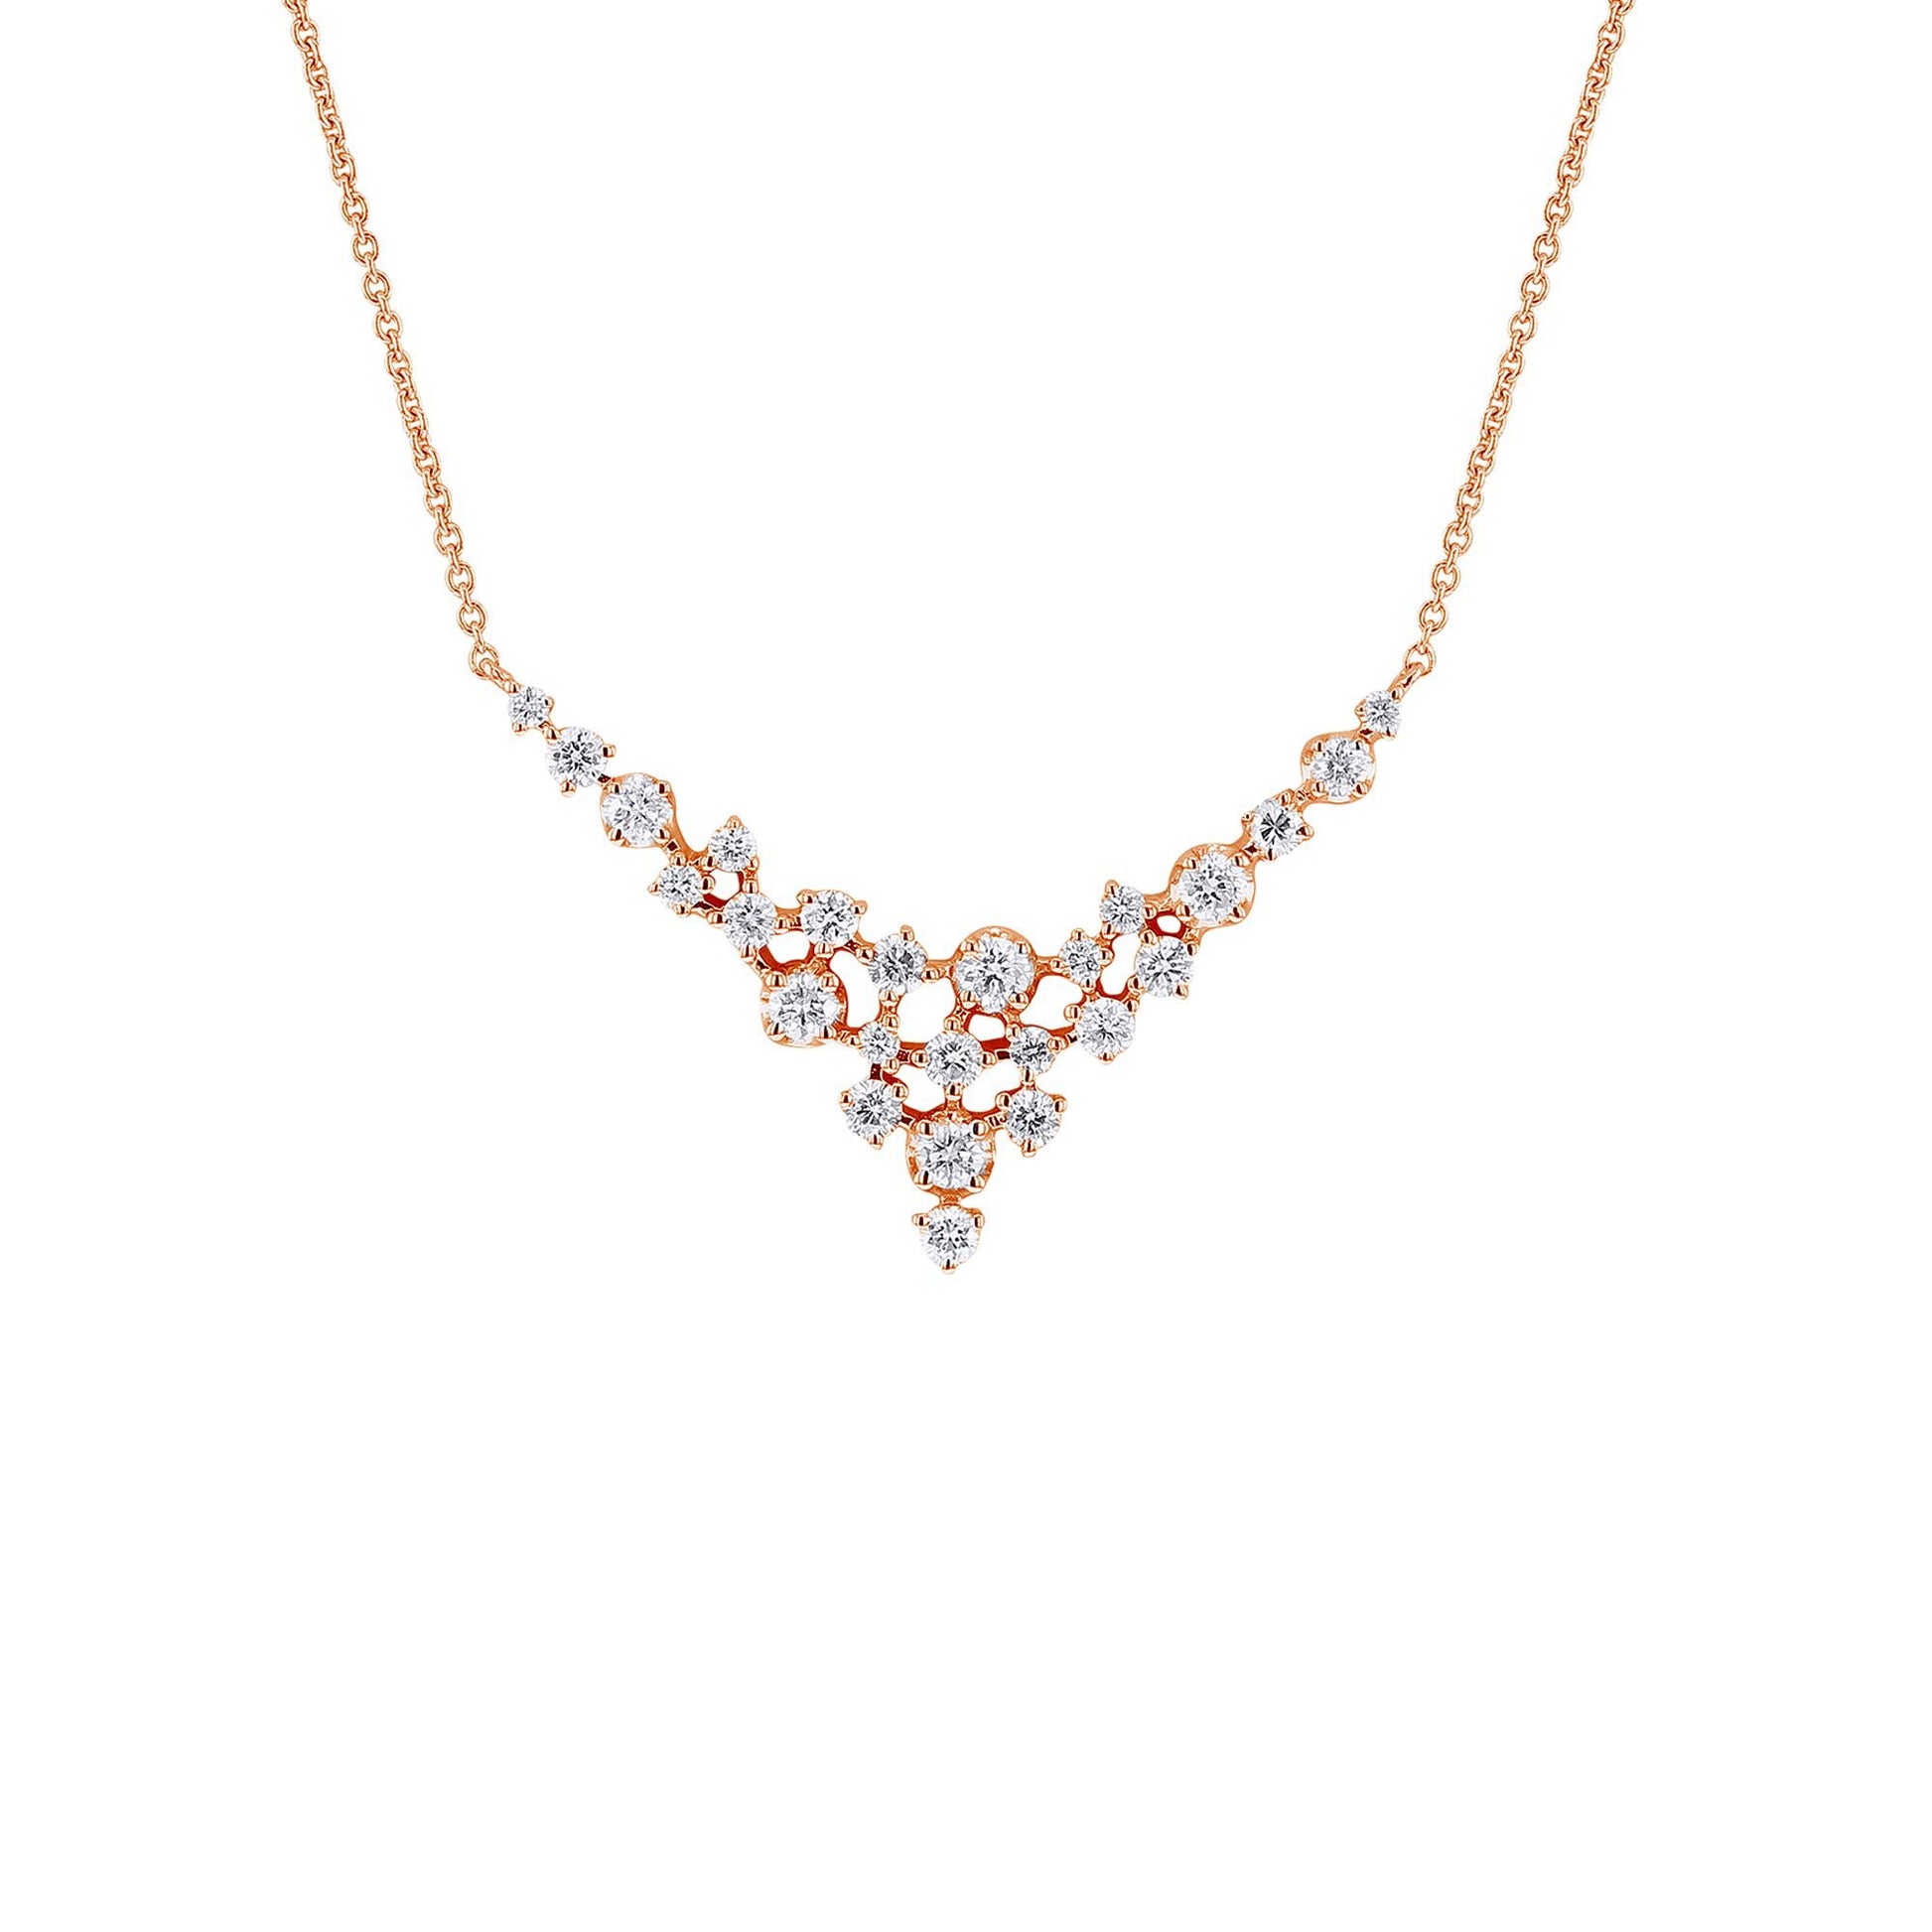 Edythes Entanglement Diamond Necklace